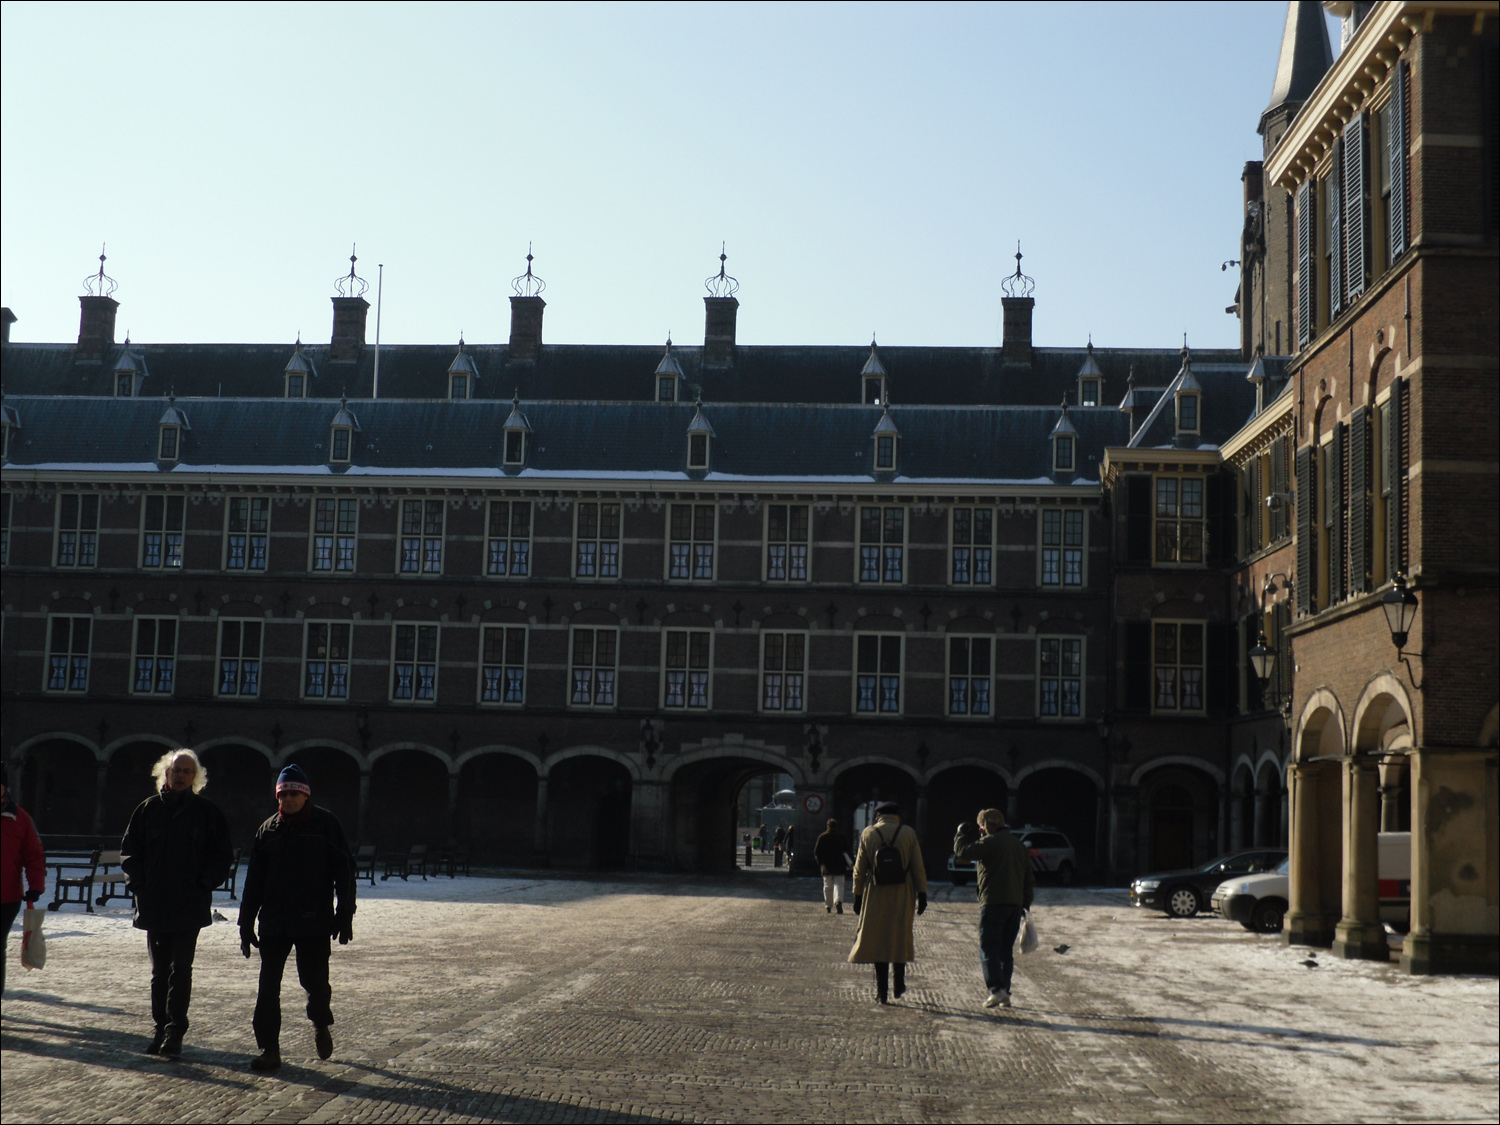 Hague-Binnenhof parliament buildngs